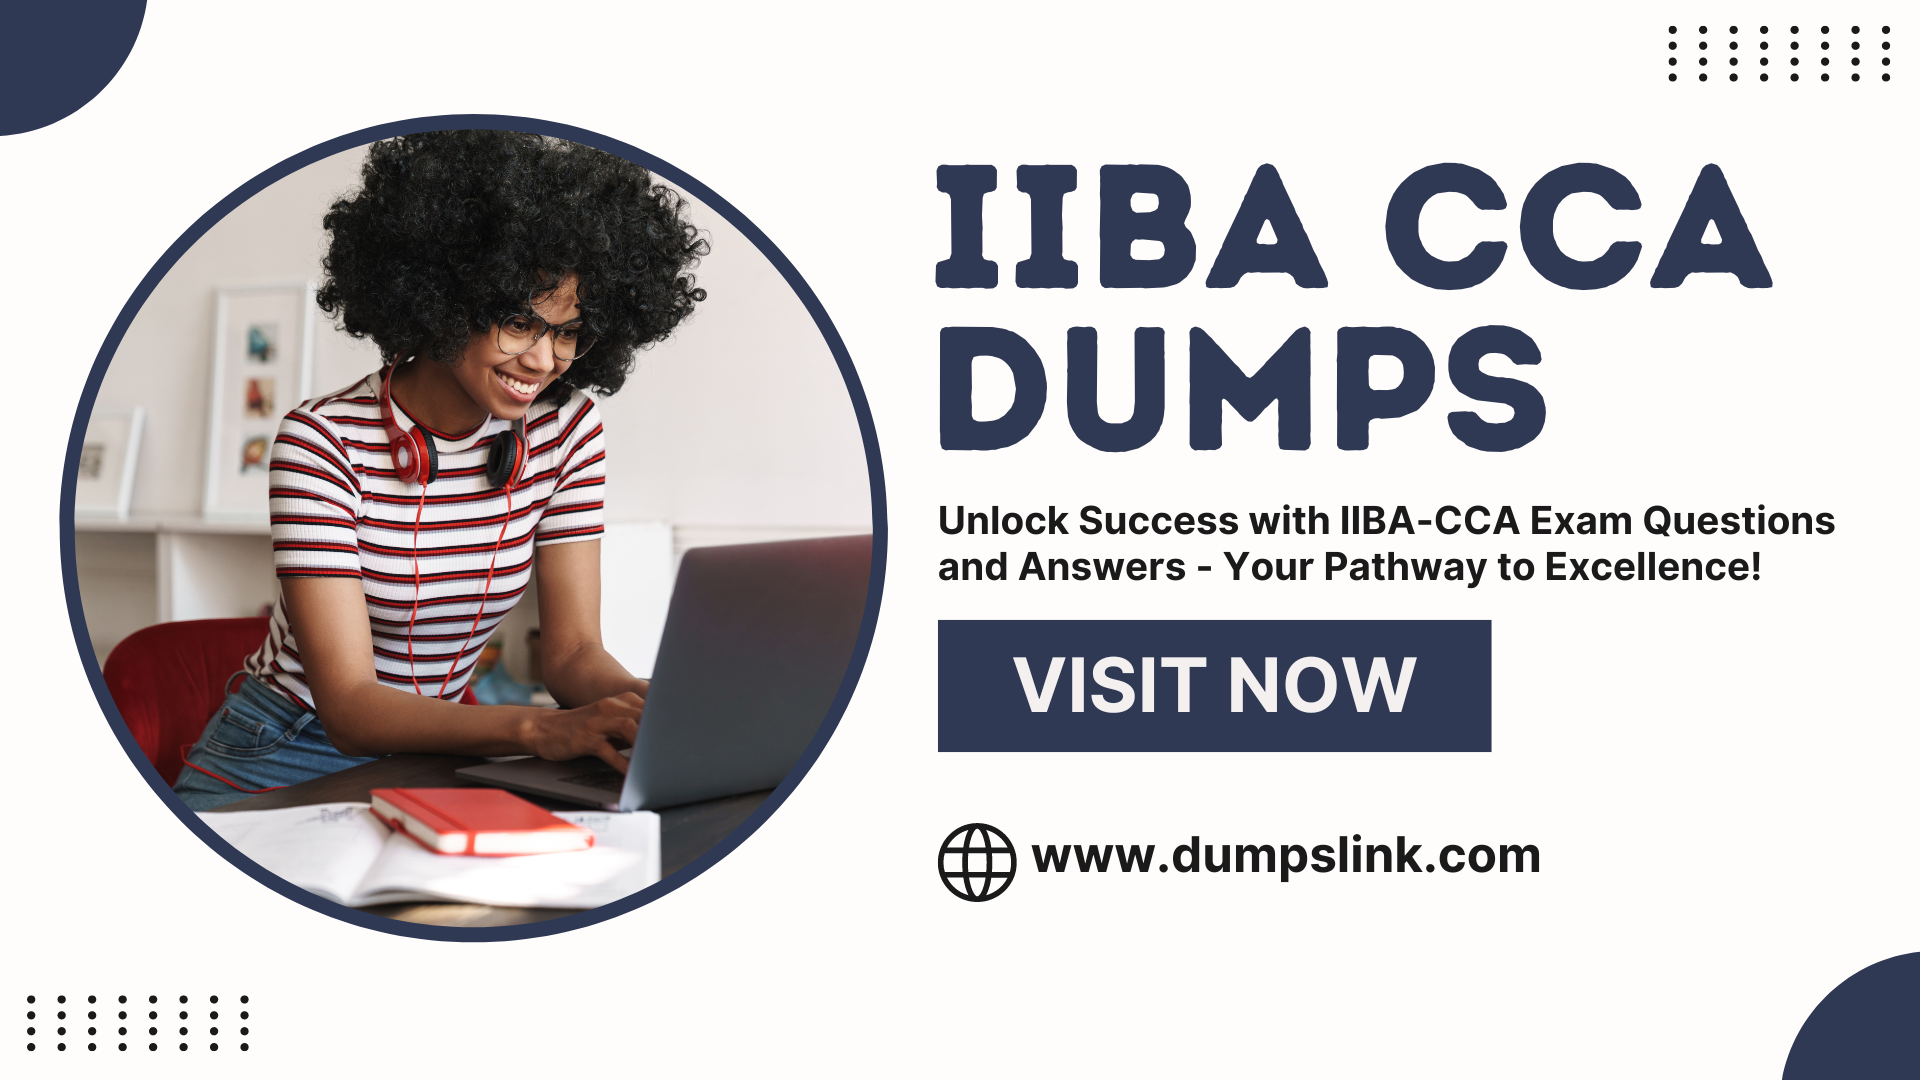 IIBA-CCA exam dumps